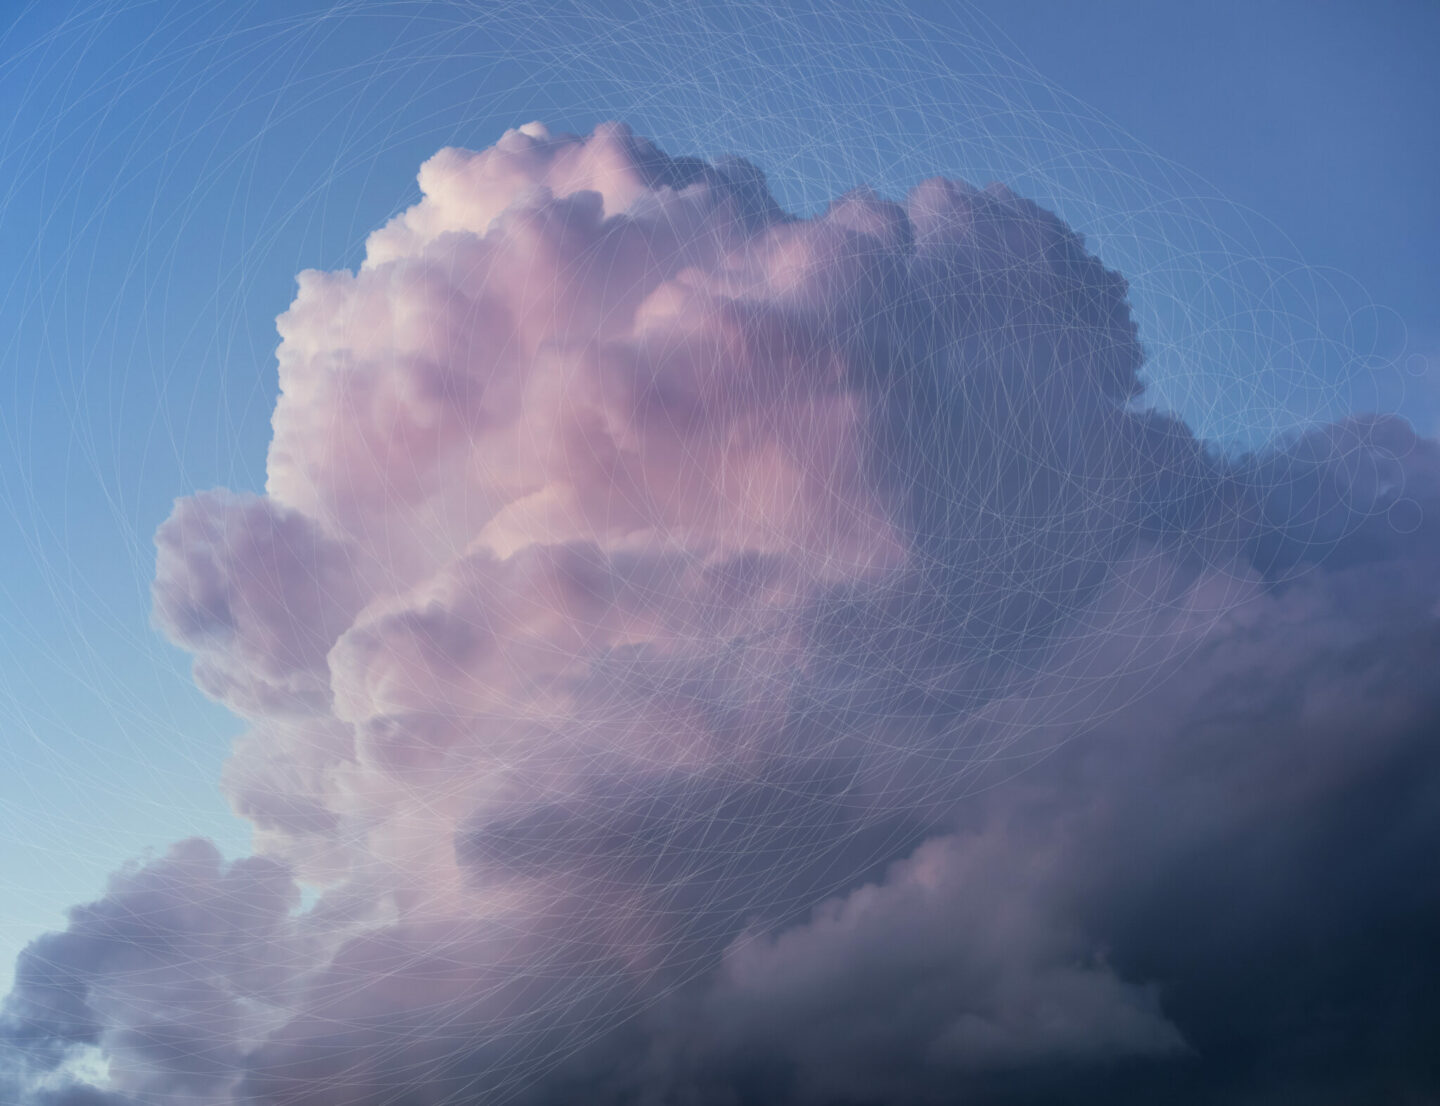 Trevor Paglen, "Cloud #246 Hough Circle Transform", 2019. Coll. Frac Normandie